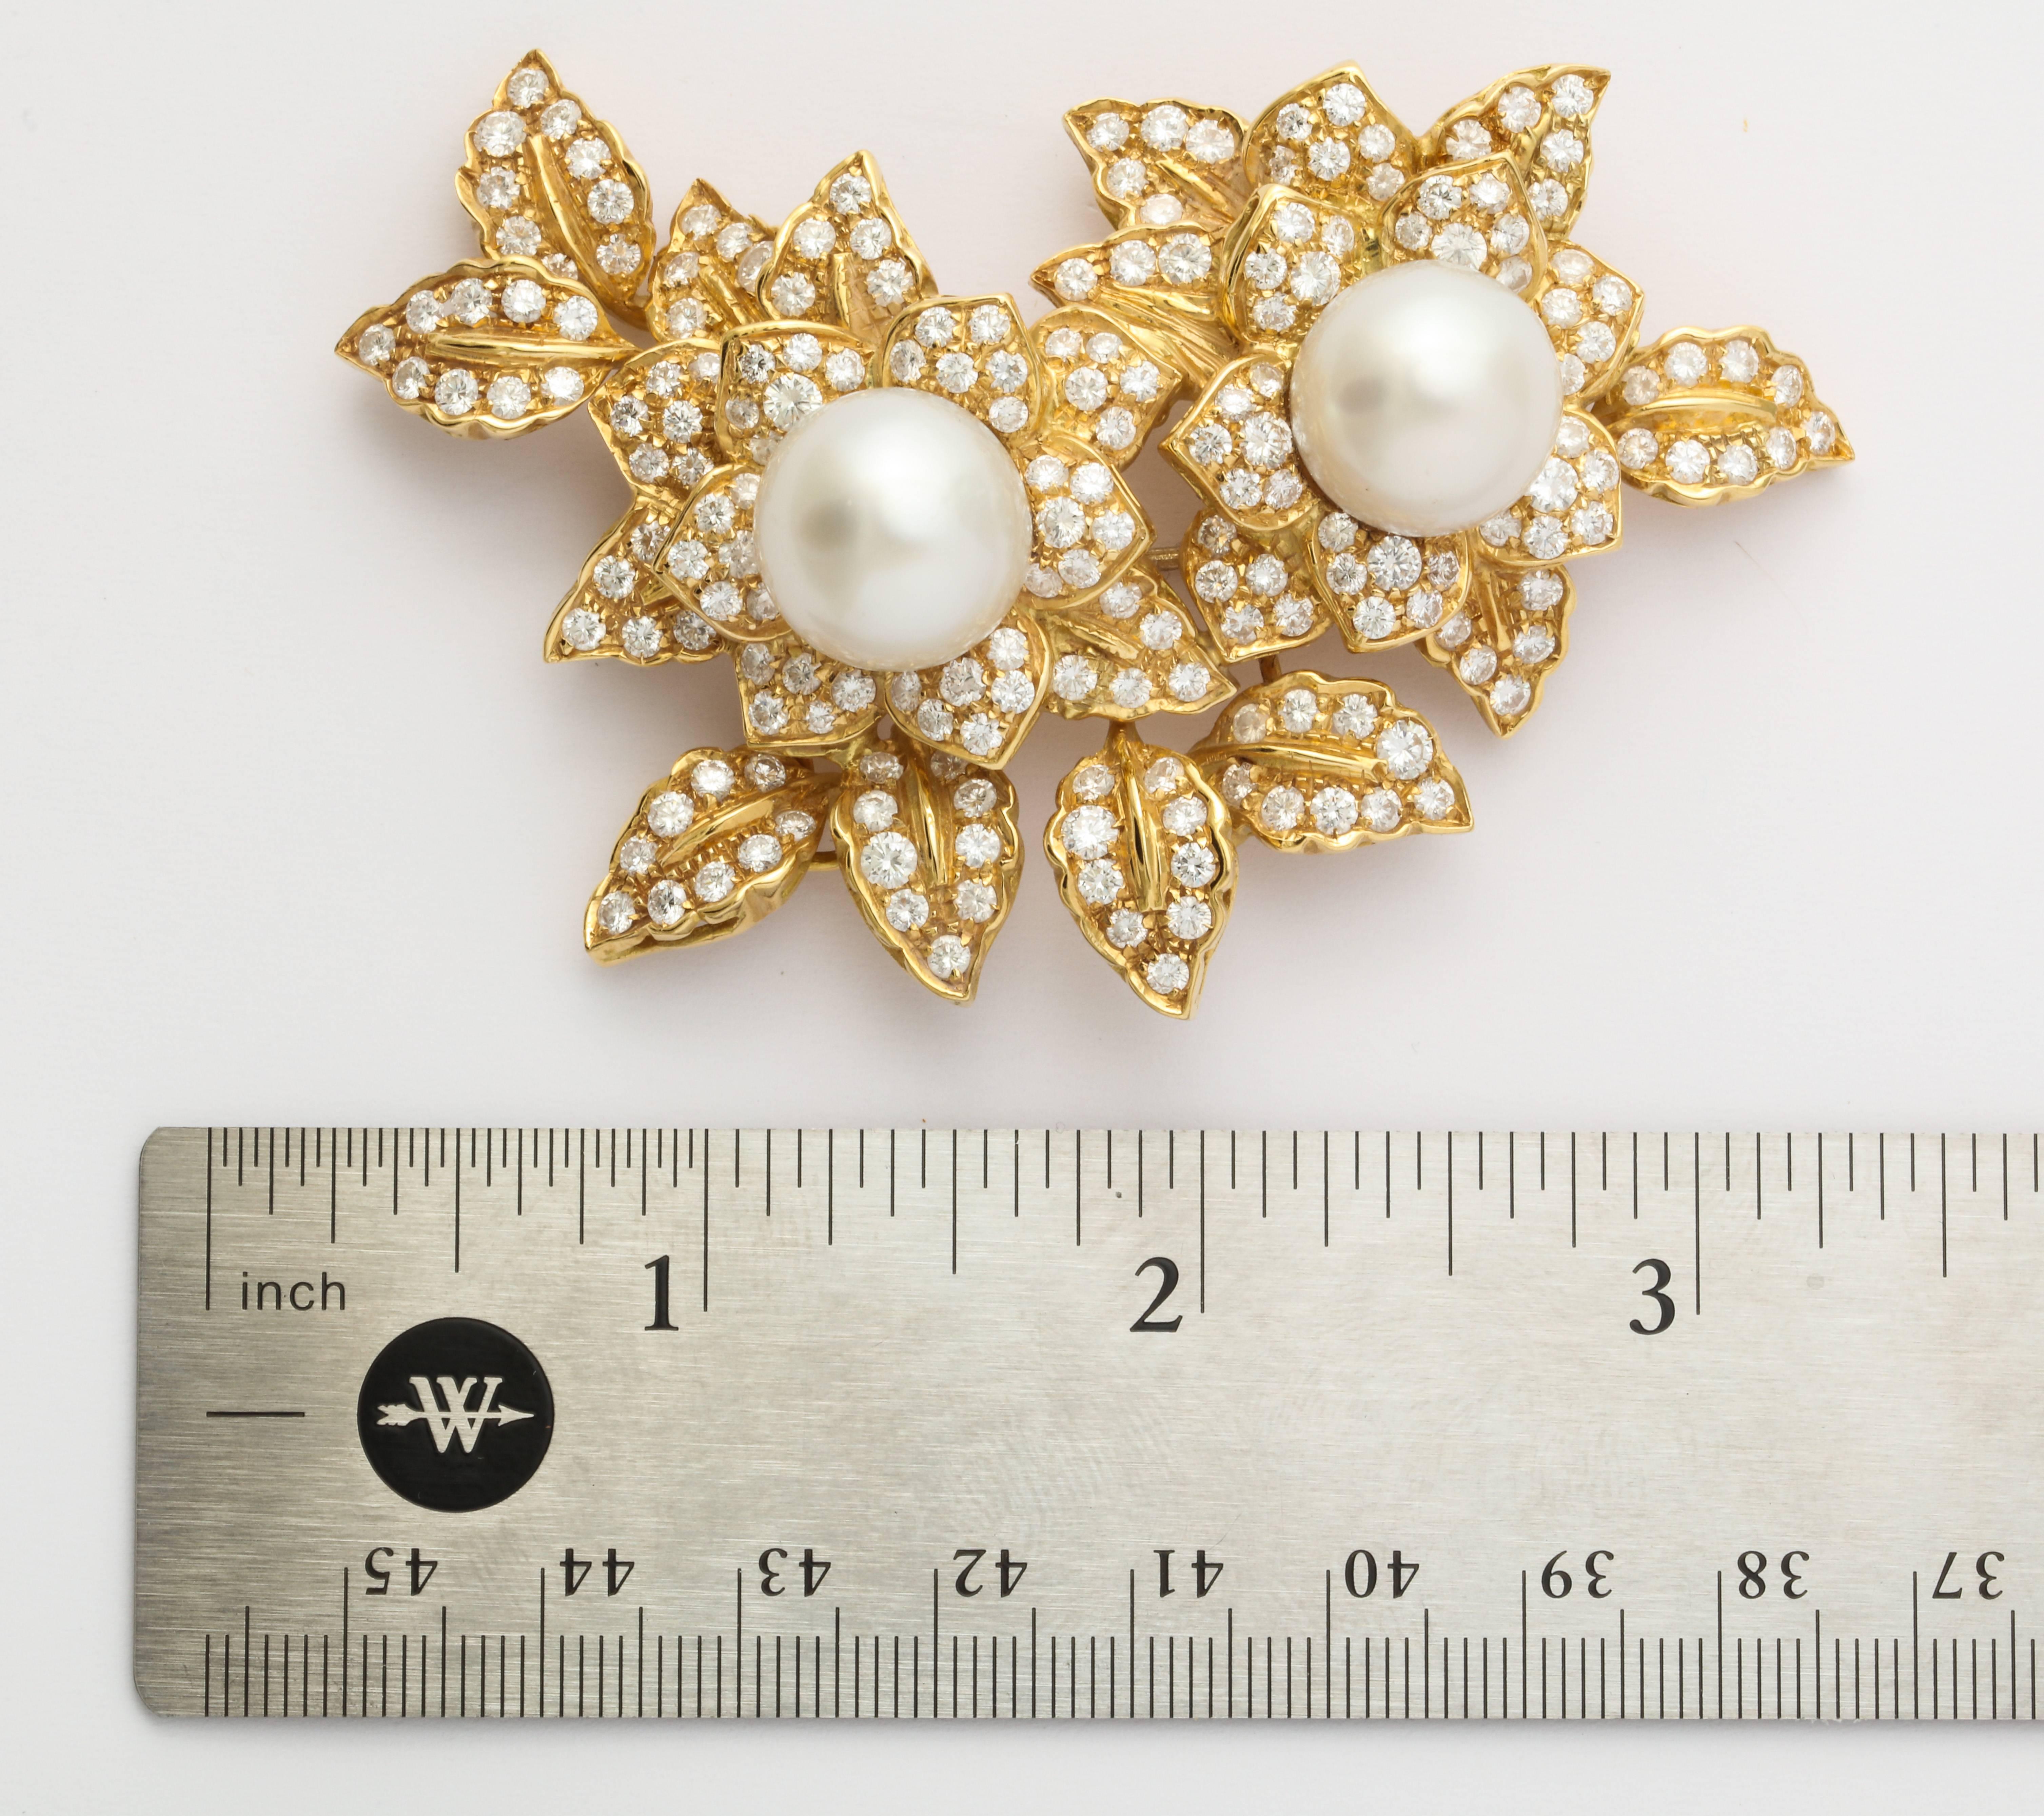 Women's Impressive Diamond Cultured Pearl Gold Necklace Earrings Pin Set